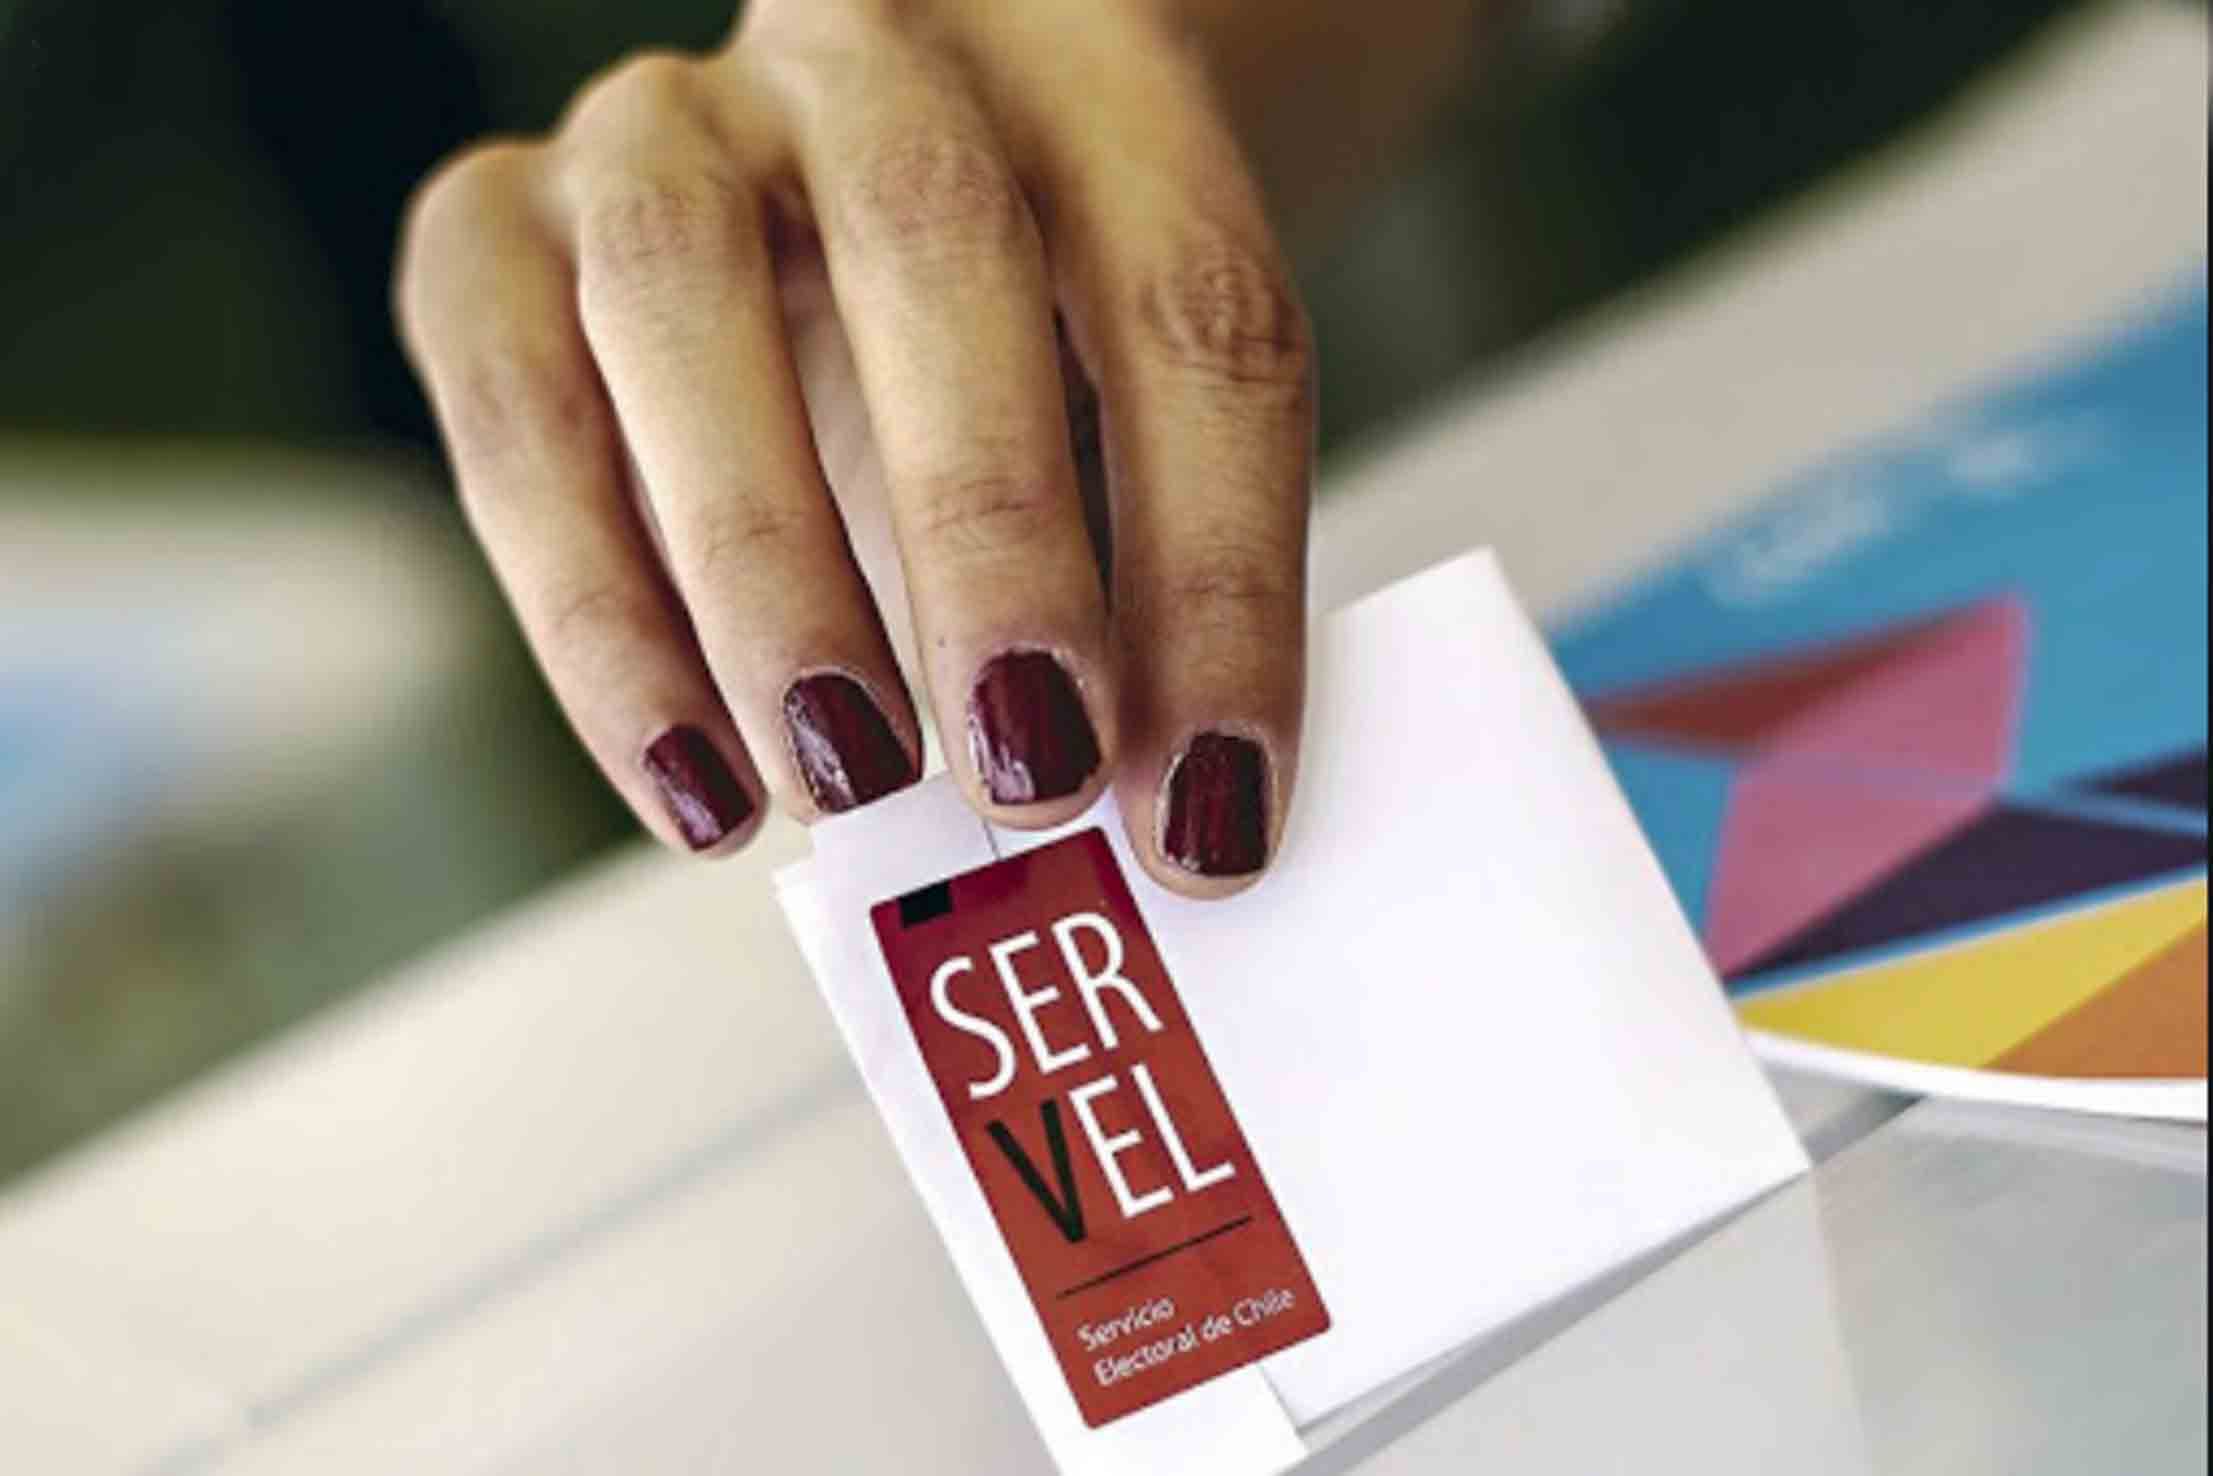 Servel anunció que están listos para las mega elecciones del fin de semana